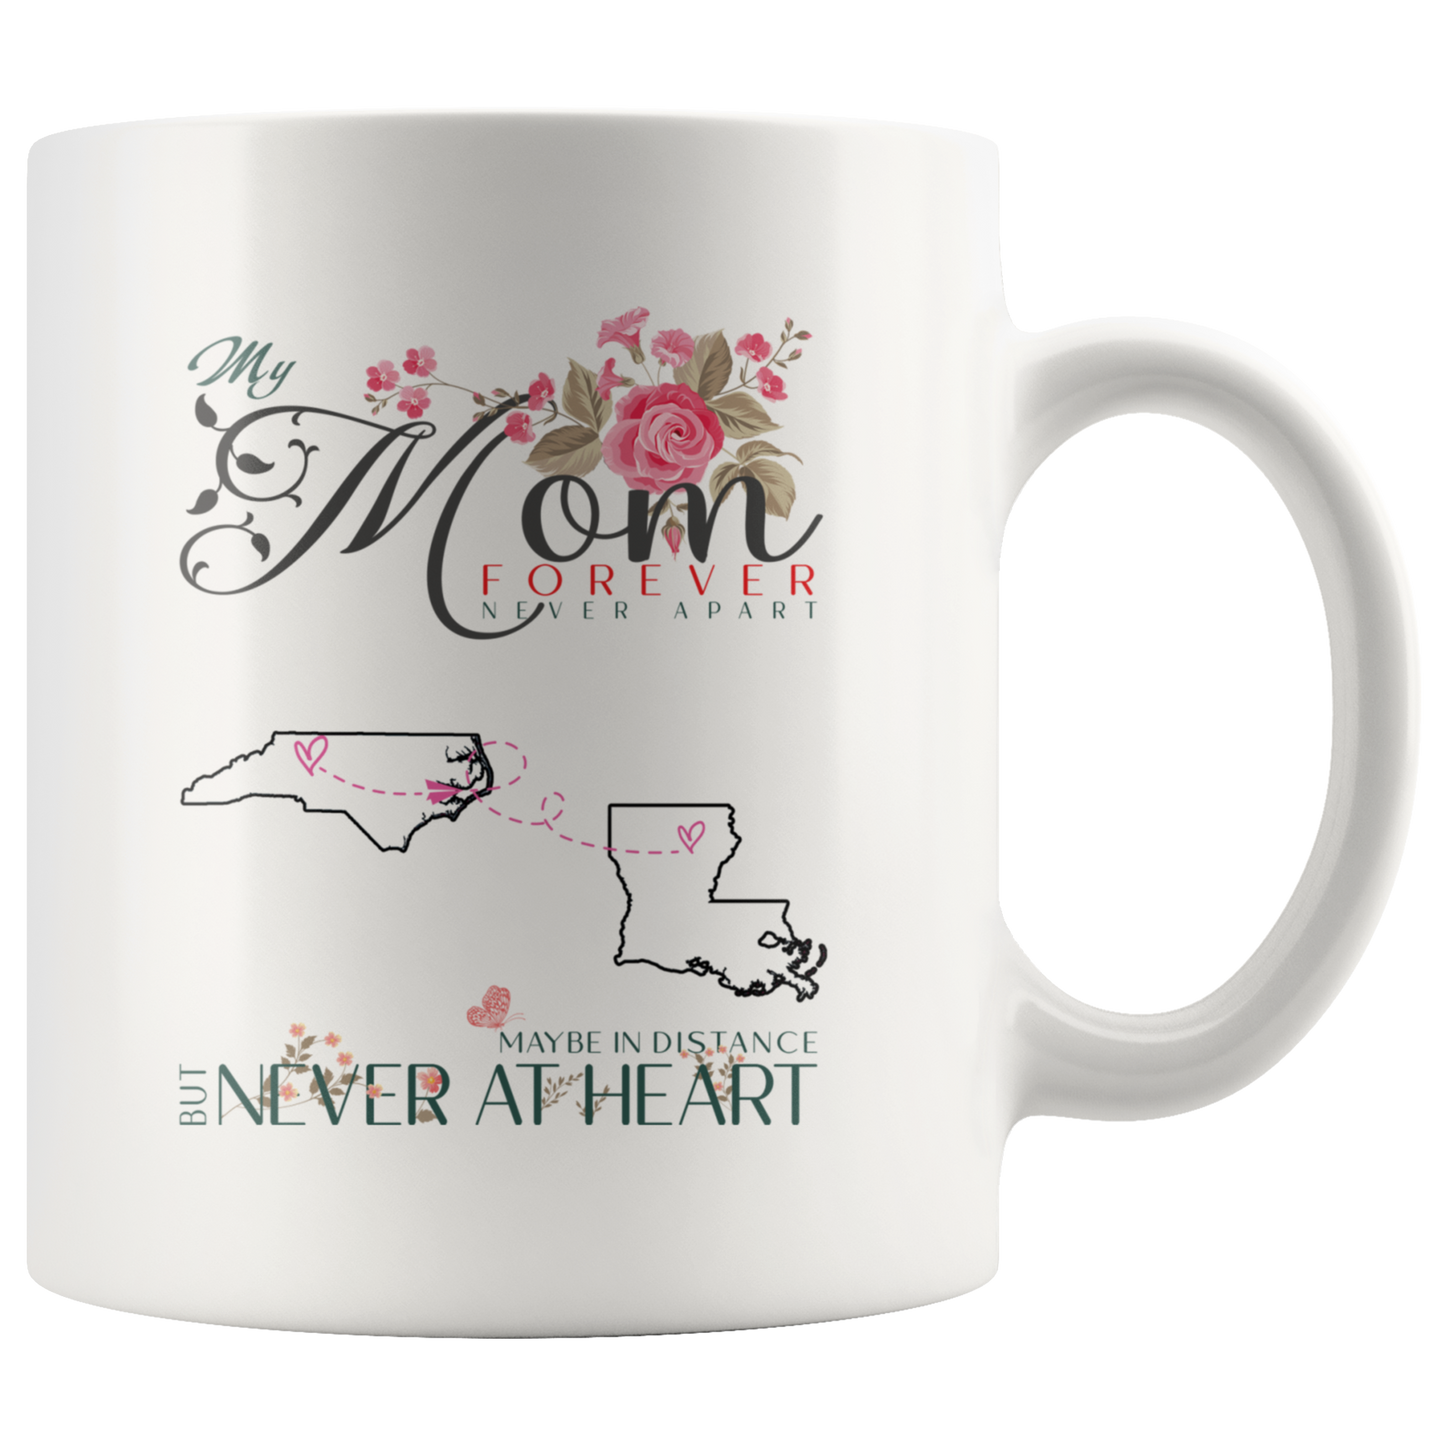 M-20321571-sp-26551 - [ North Carolina | Louisiana ] (CC_Accent_Mug_) Personalized Mothers Day Coffee Mug - My Mom Forever Never A